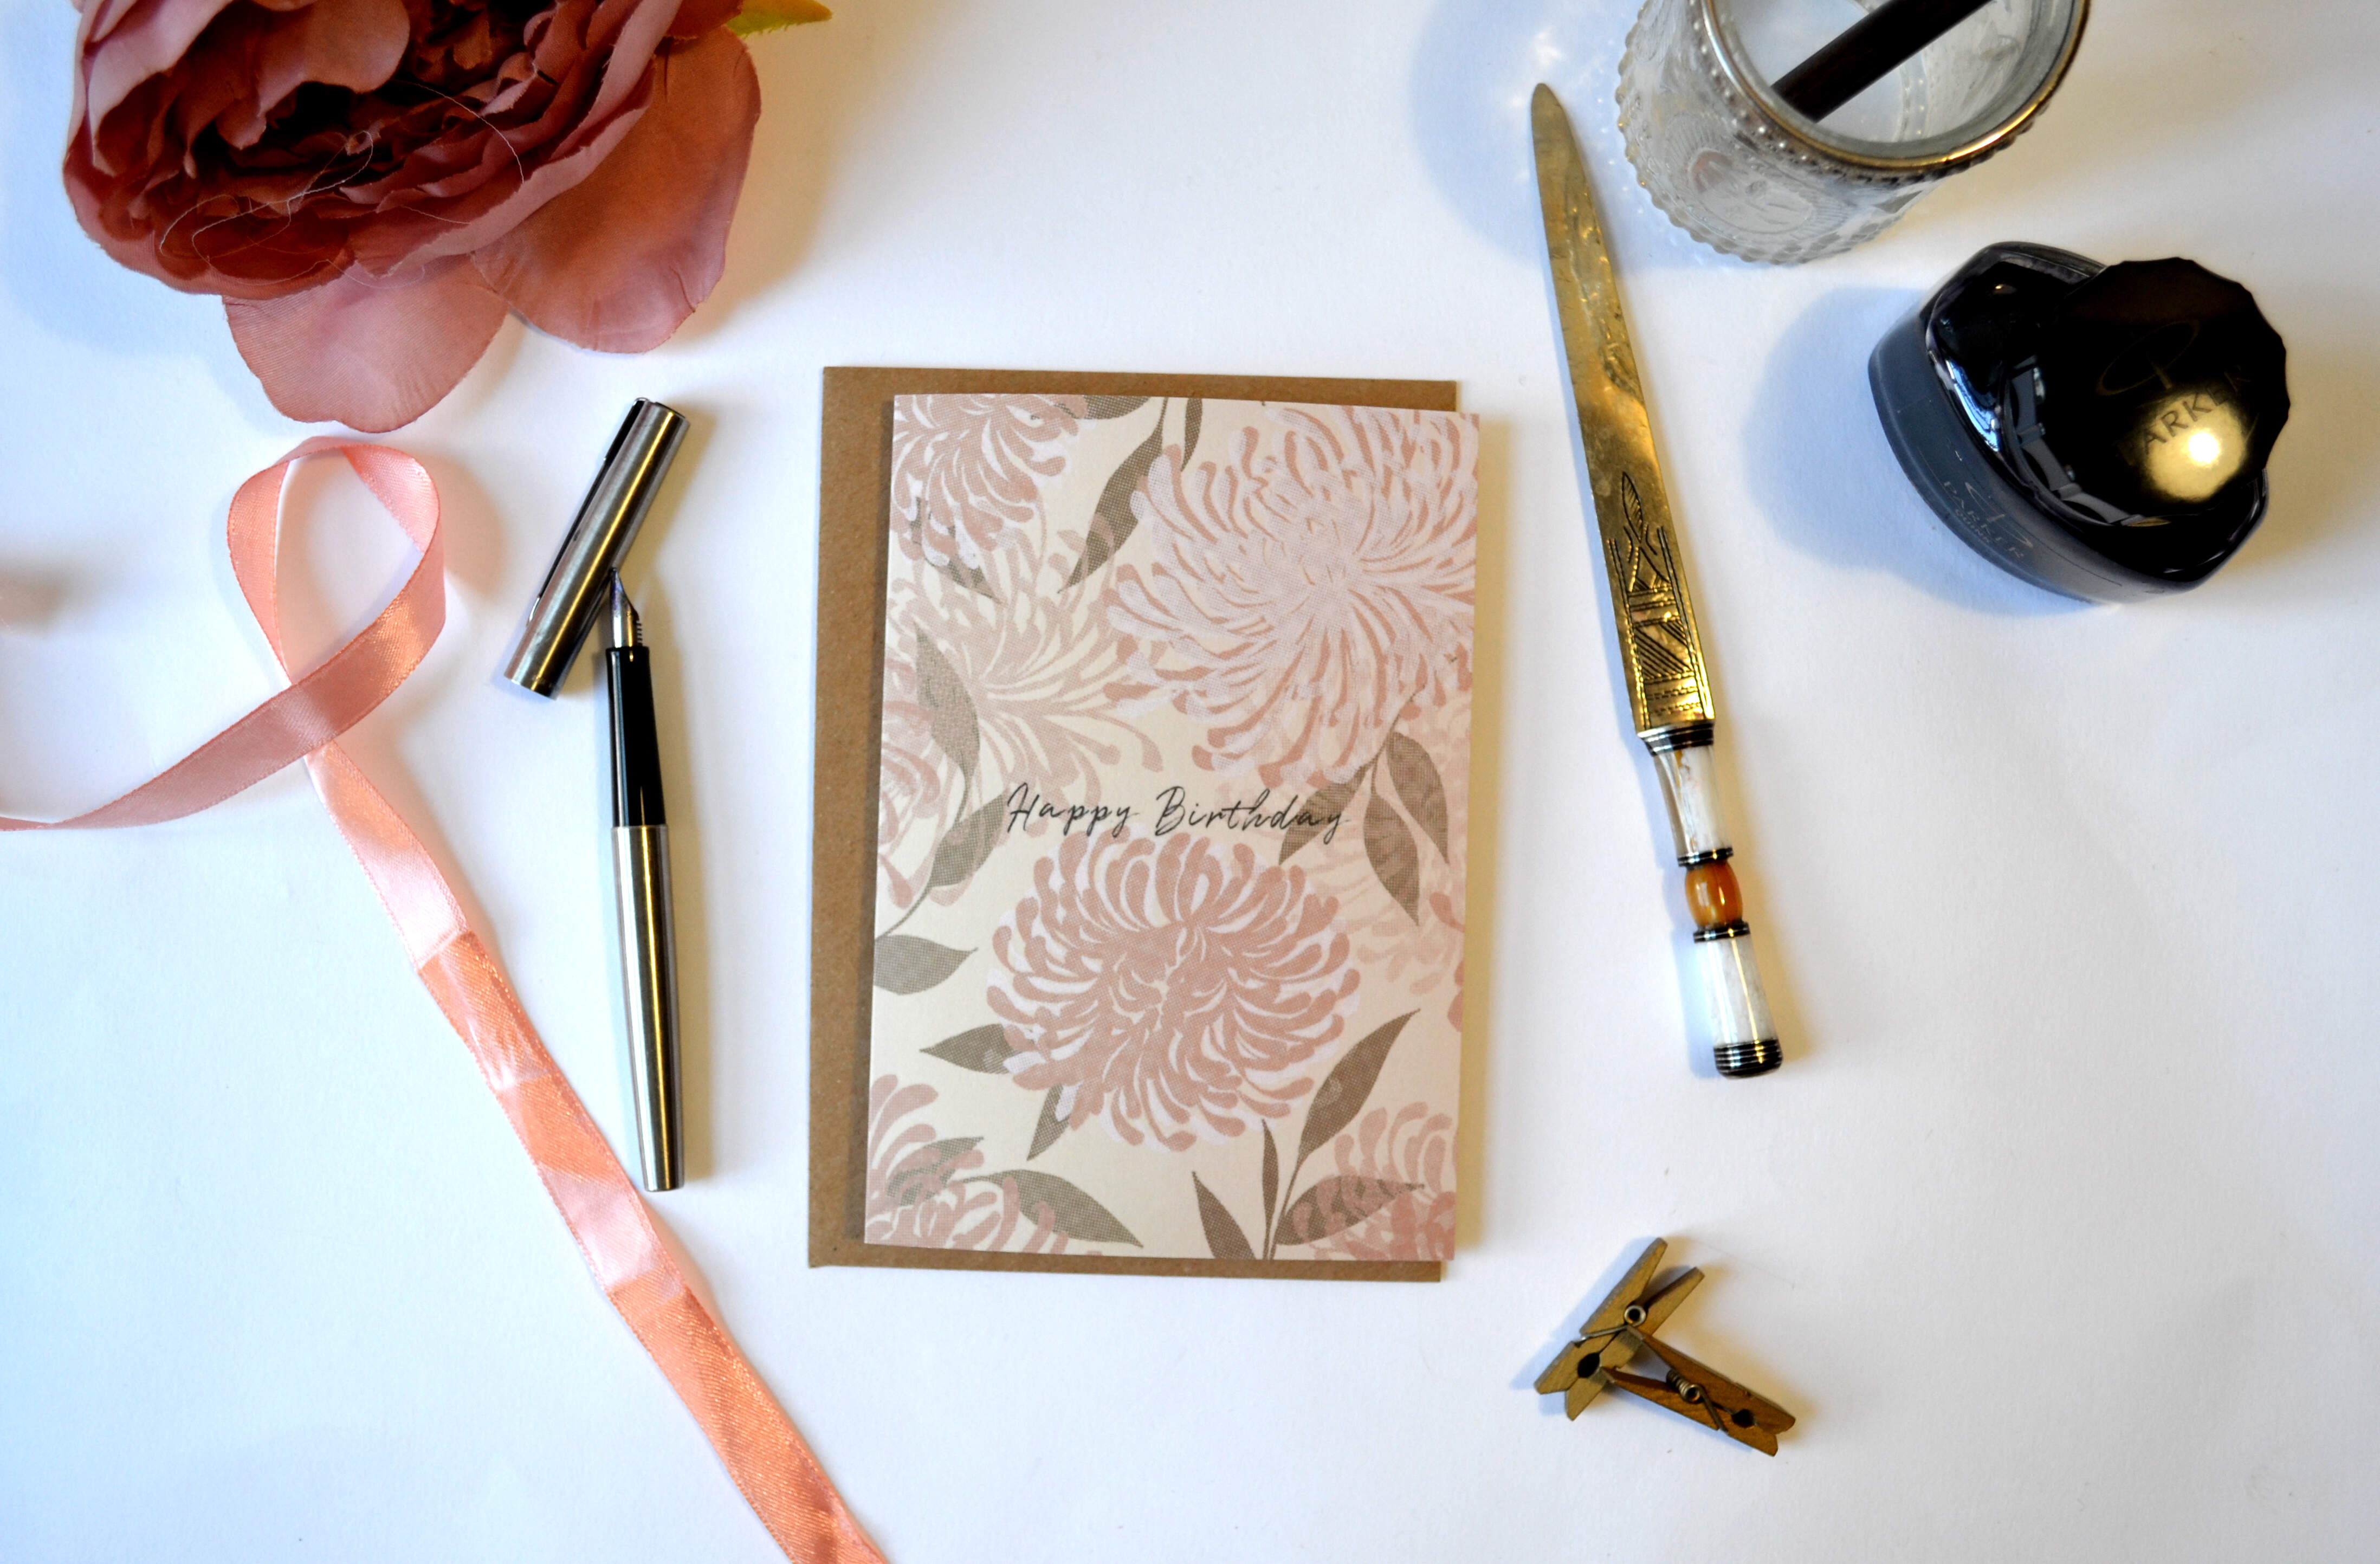 Happy birthday chrysanthemum flower greetings card